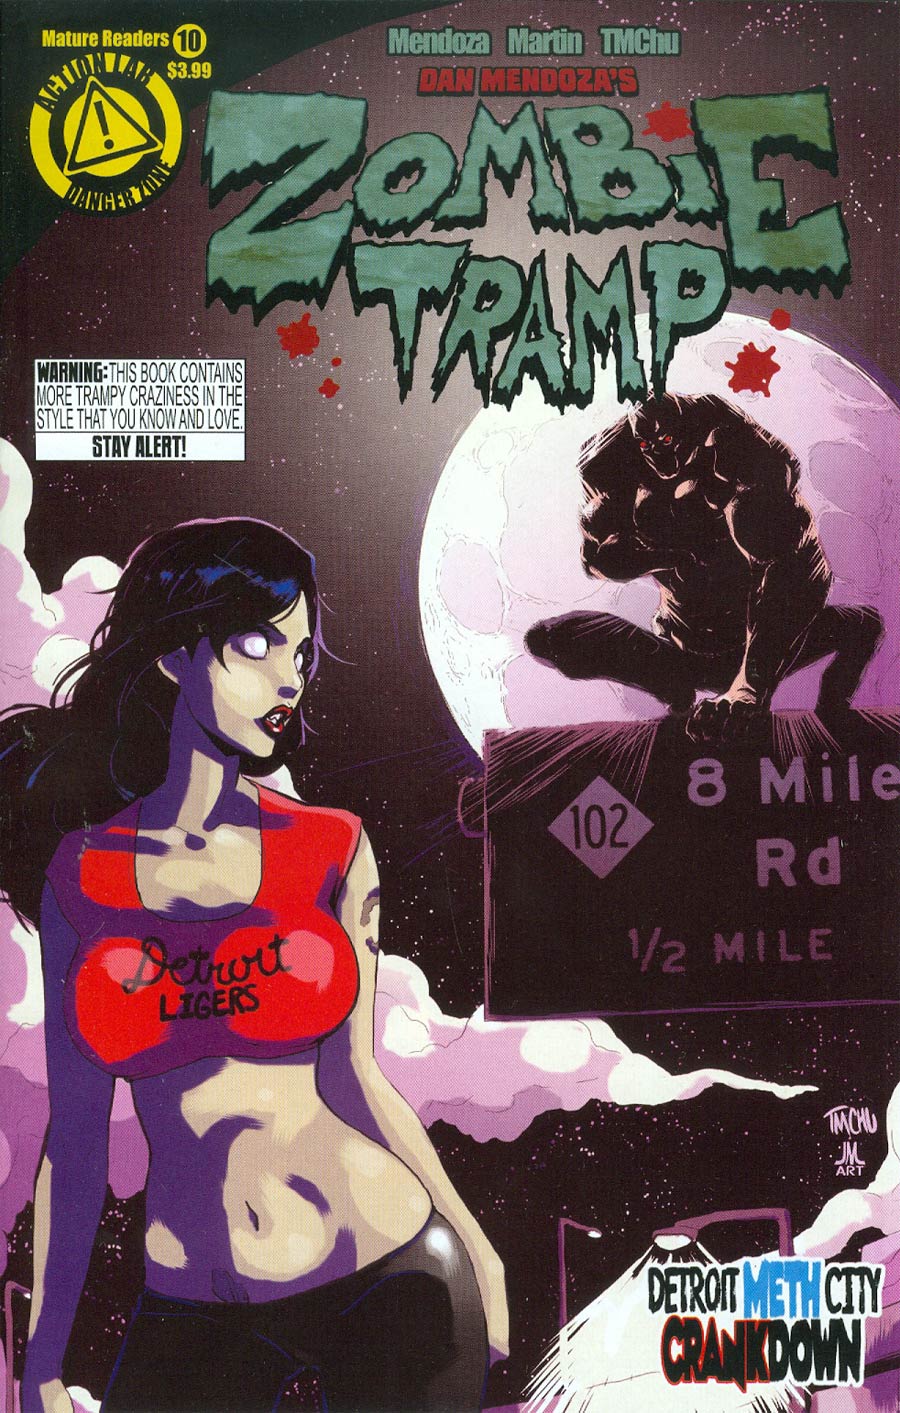 Zombie Tramp Vol 2 #10 Cover A Regular Cover